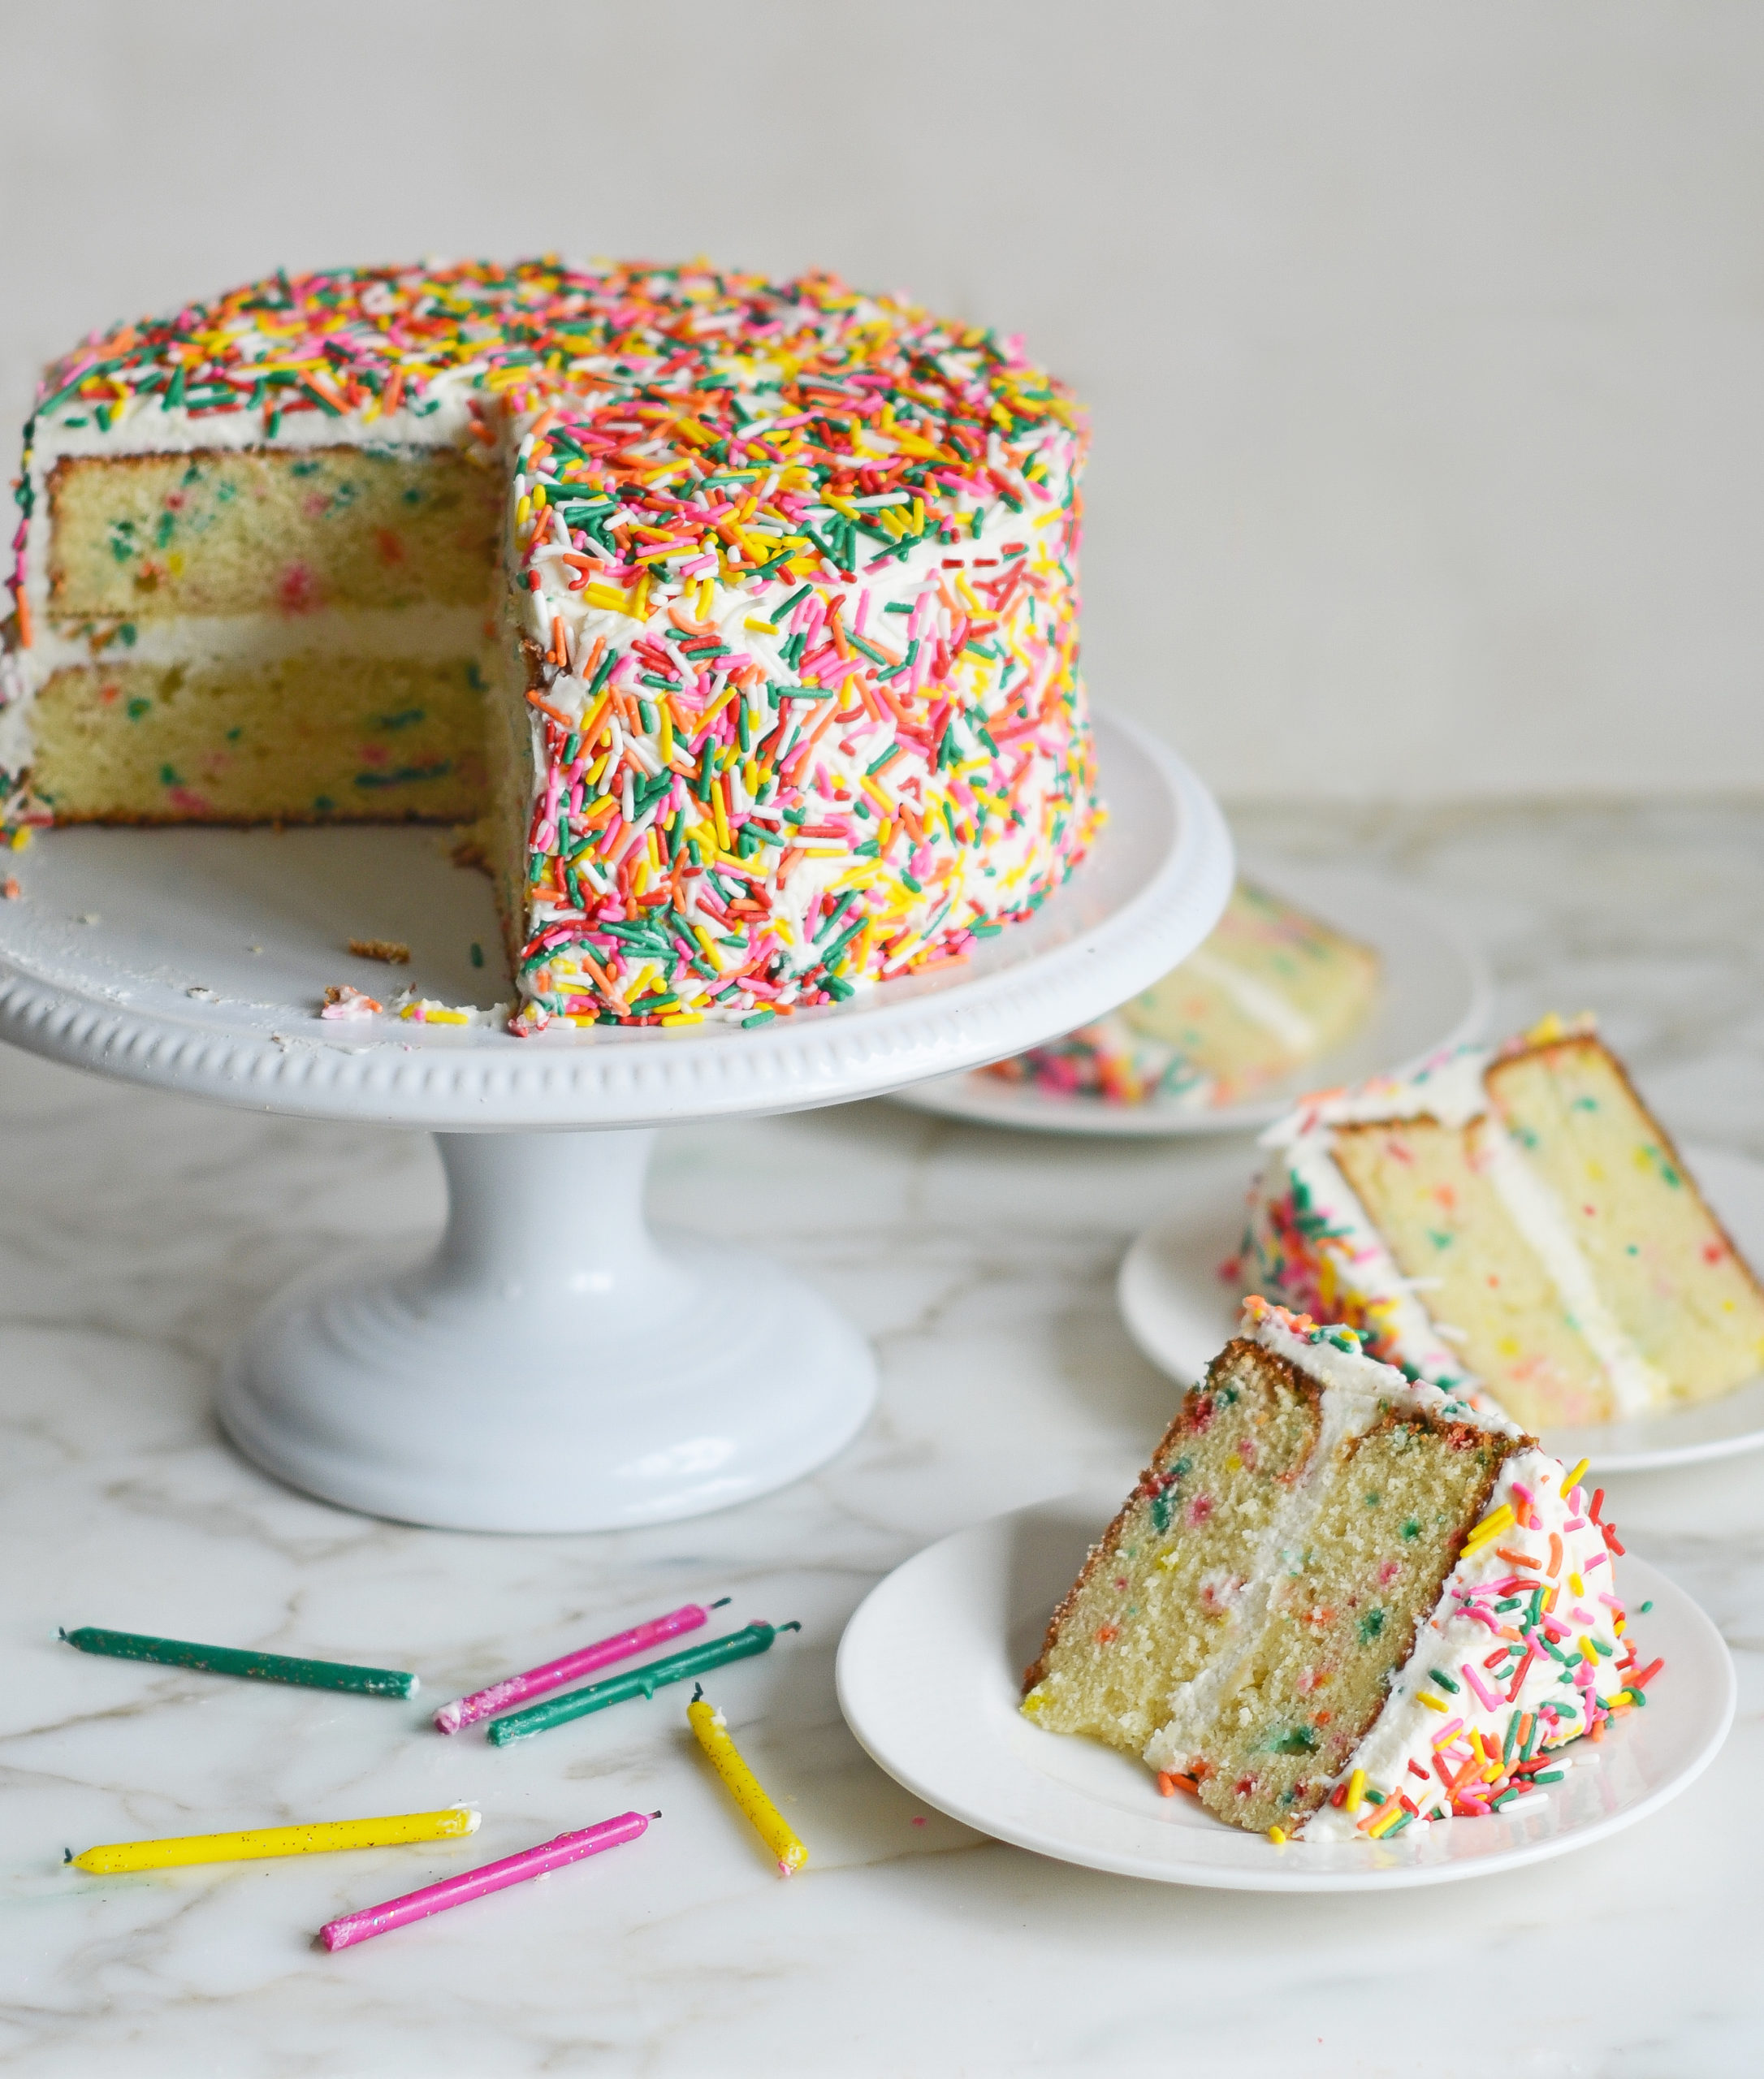 Cake Delivery in Australia Online | Send Cake to Australia - FNP